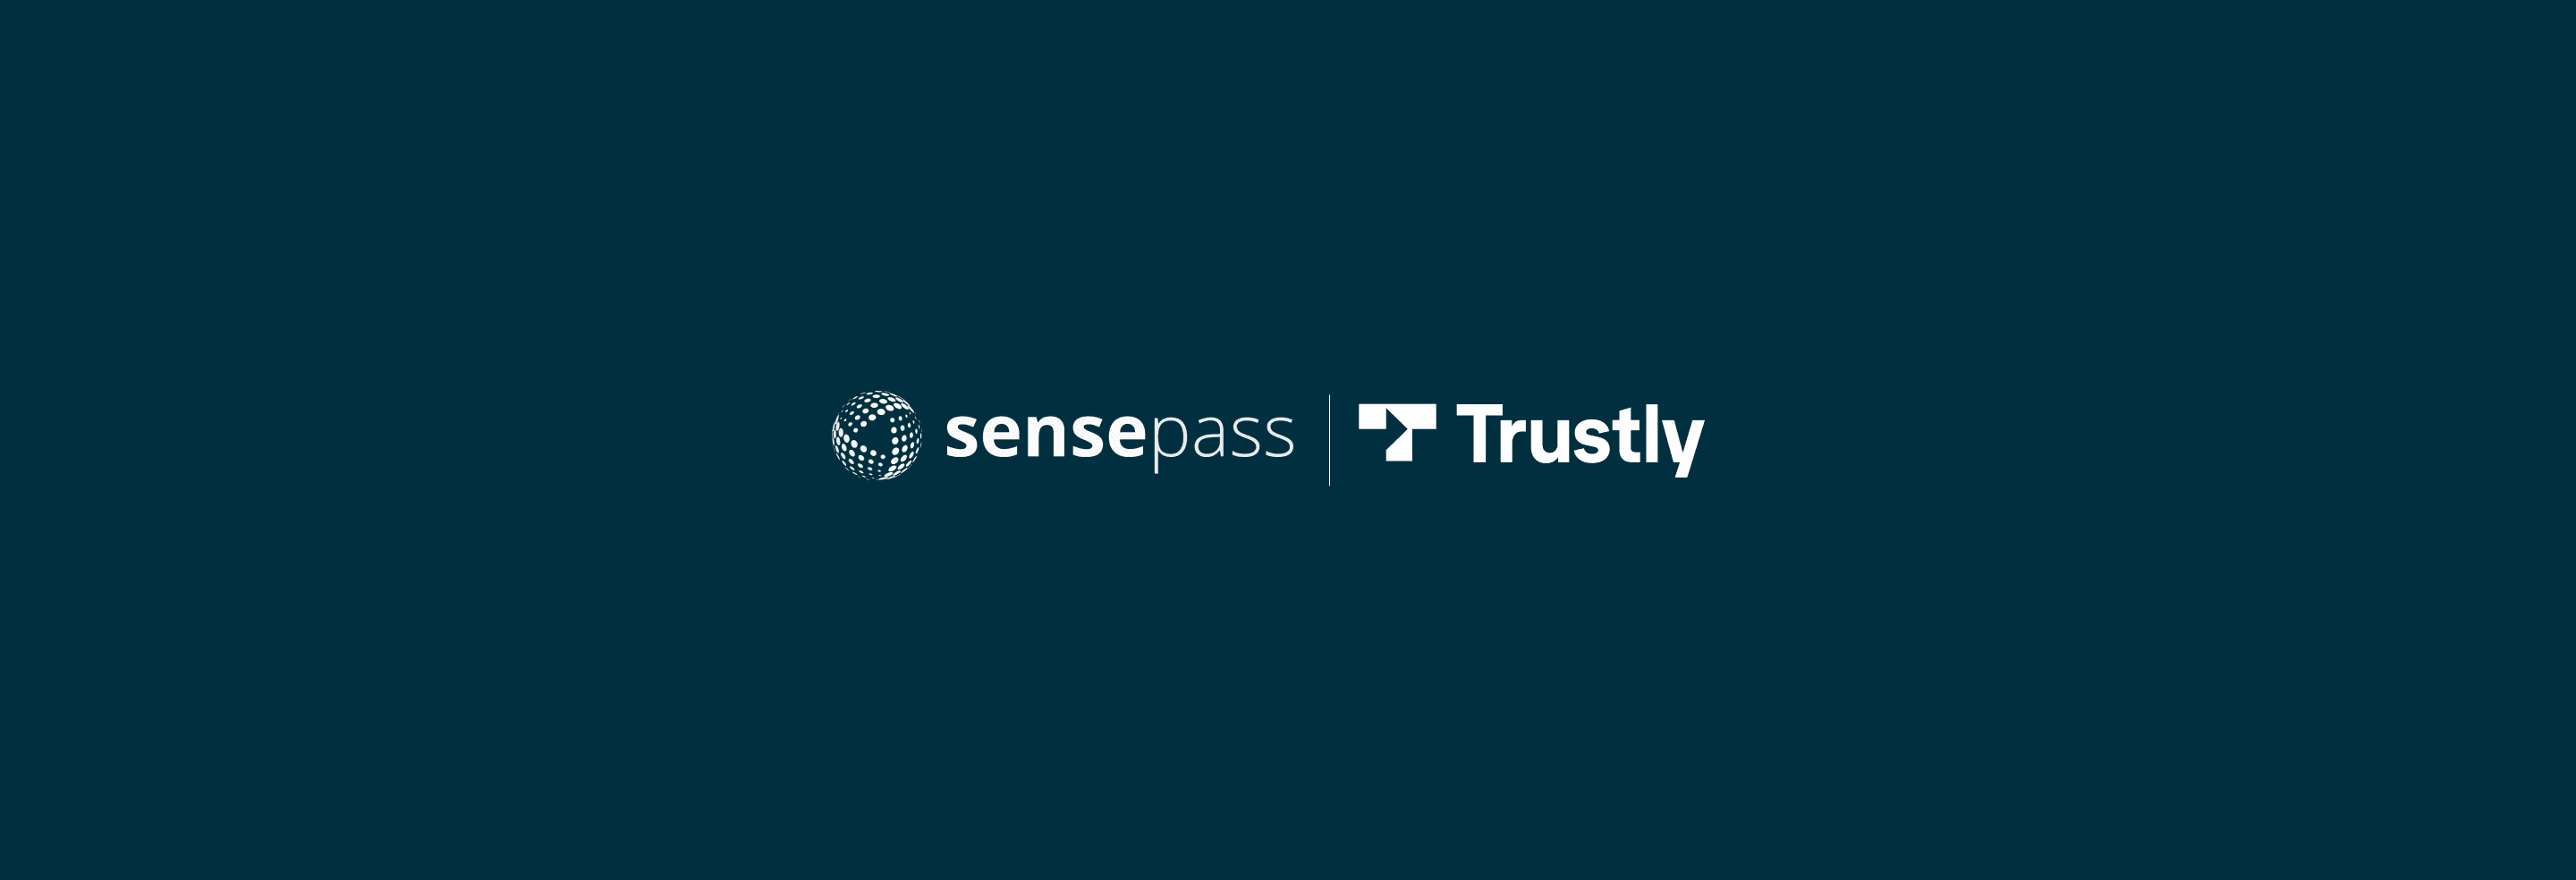 trustly_blog_desktop_sensepass